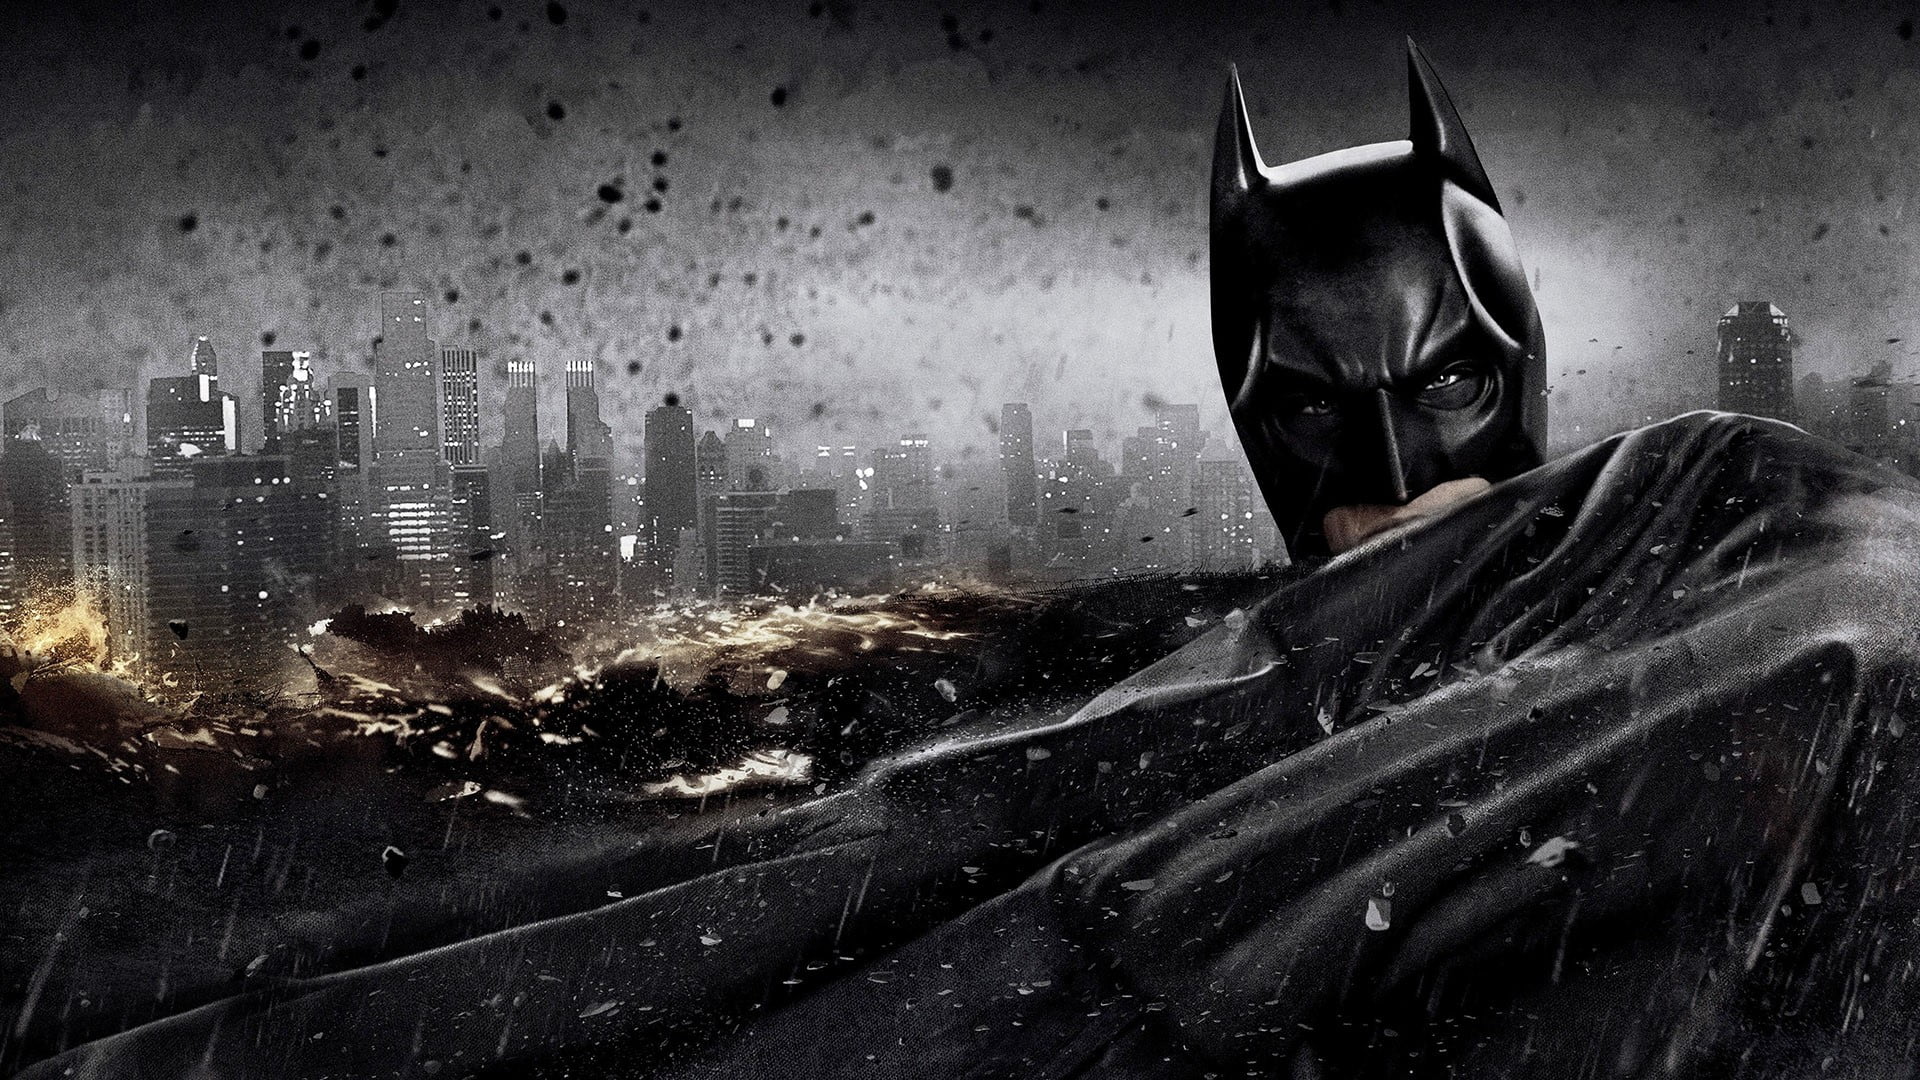 Batman illustration, Batman, The Dark Knight Rises, Christopher Nolan, Christian Bale